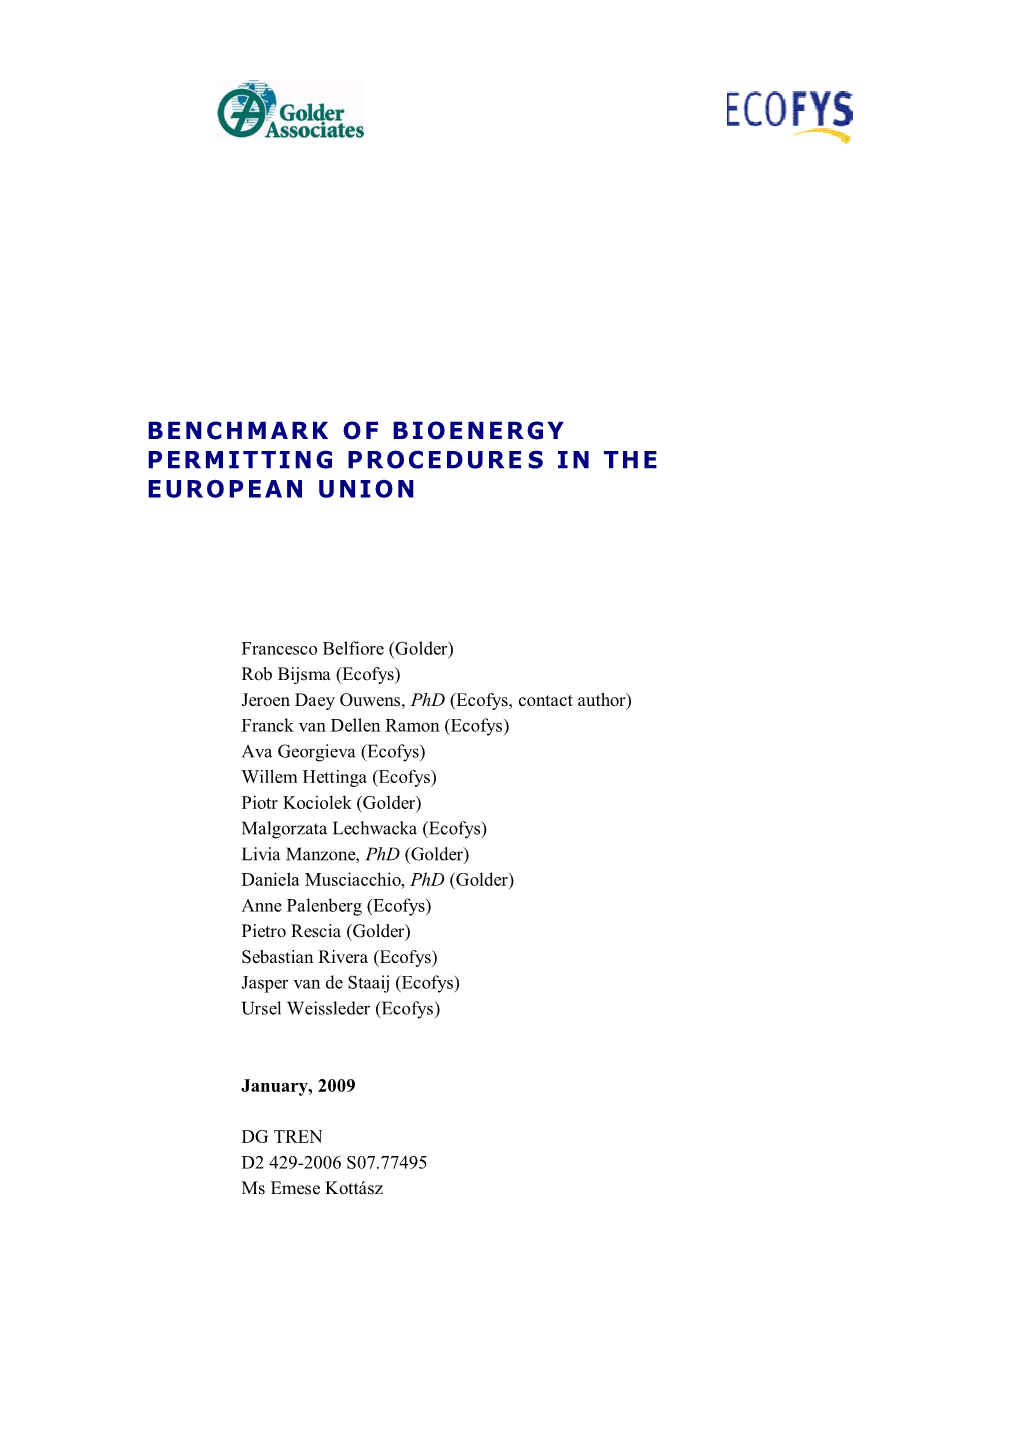 Report on EU Bioenergy Permitting Procedures